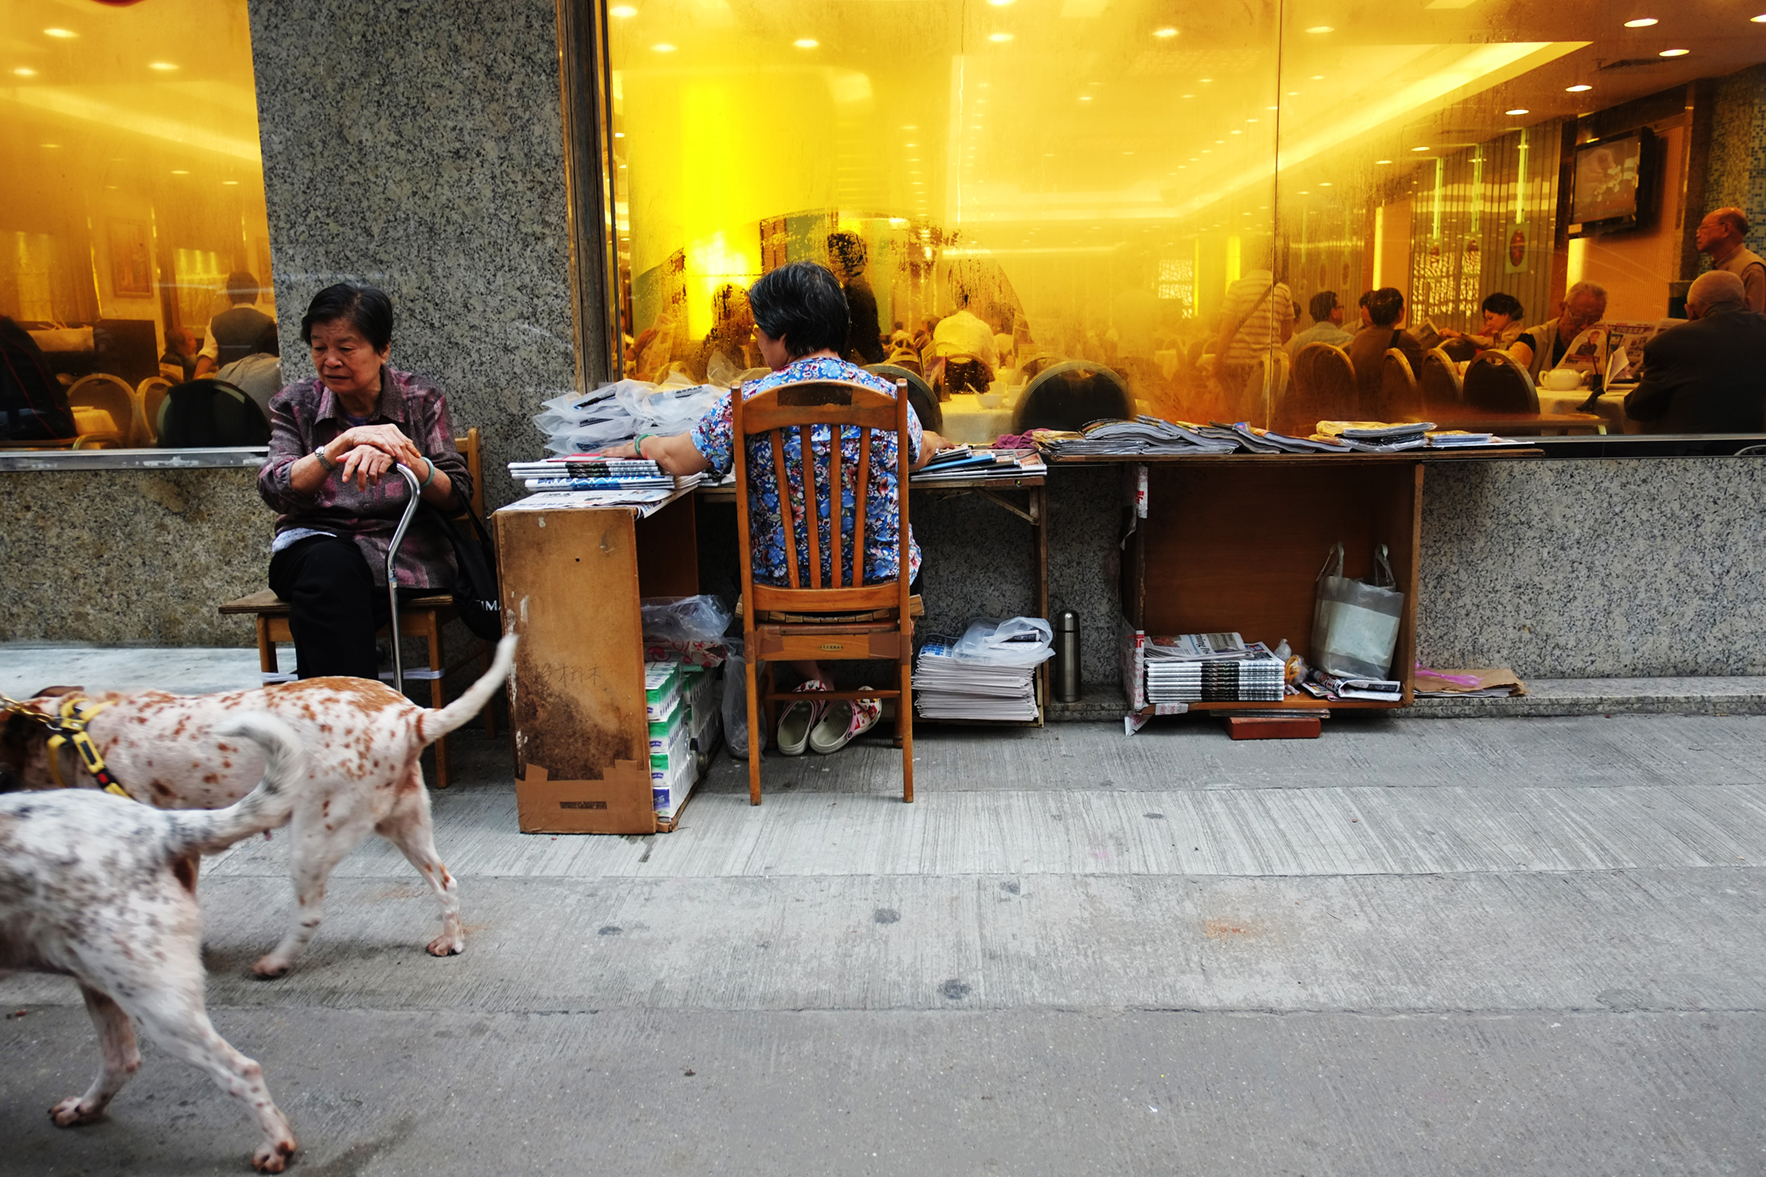  Paper sellers. Hong Kong. 2012  